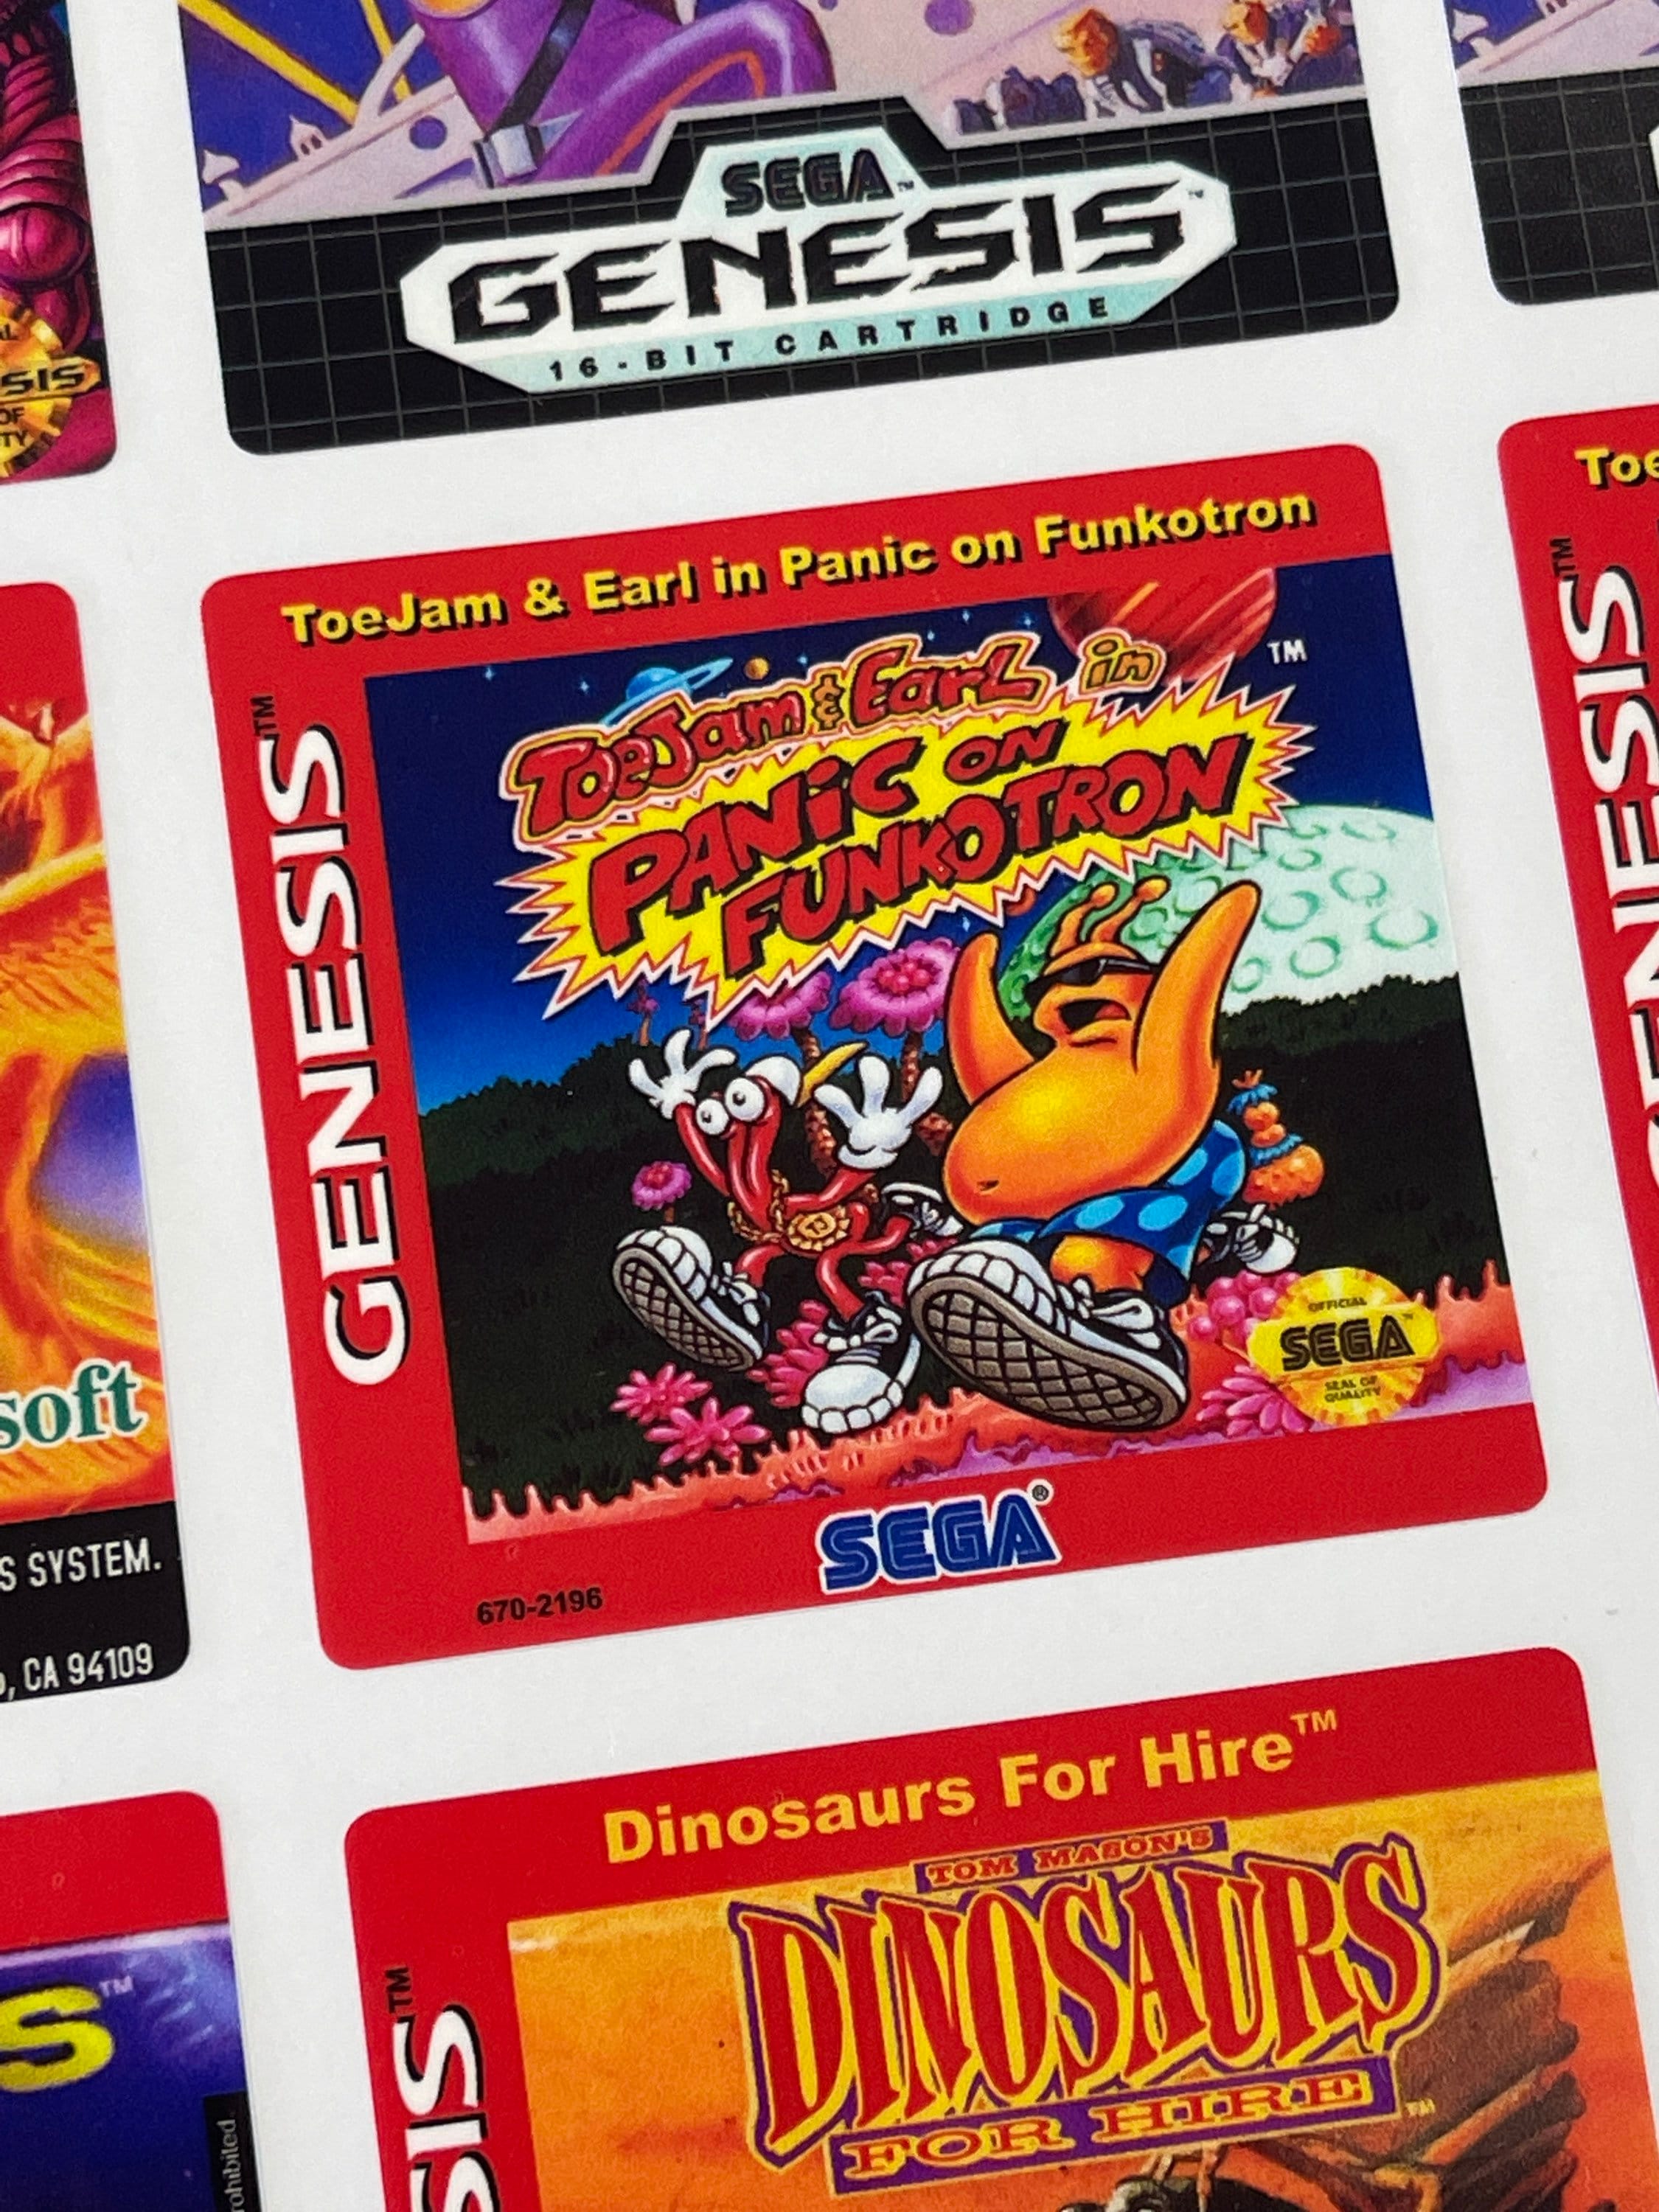 Sonic the Hedgehog 2 Sega Genesis Replacement Label Sticker 